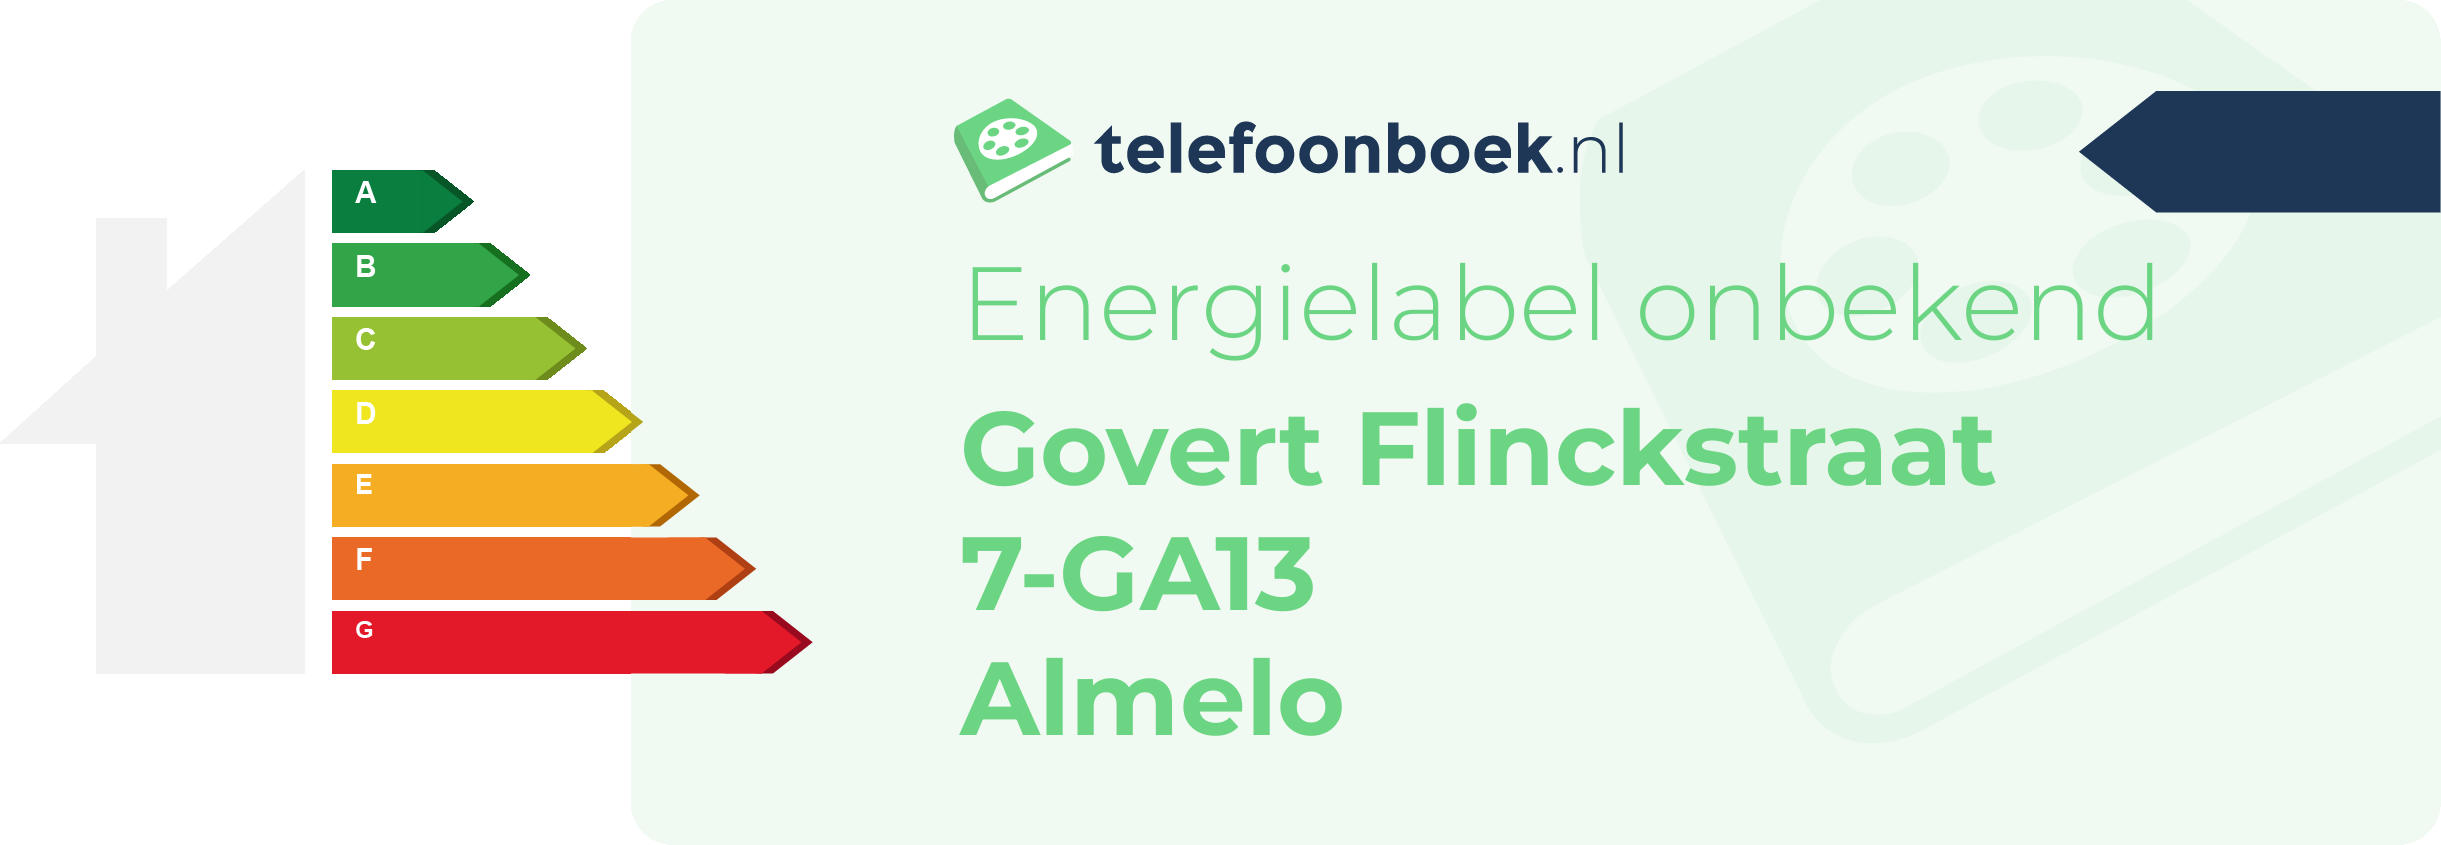 Energielabel Govert Flinckstraat 7-GA13 Almelo